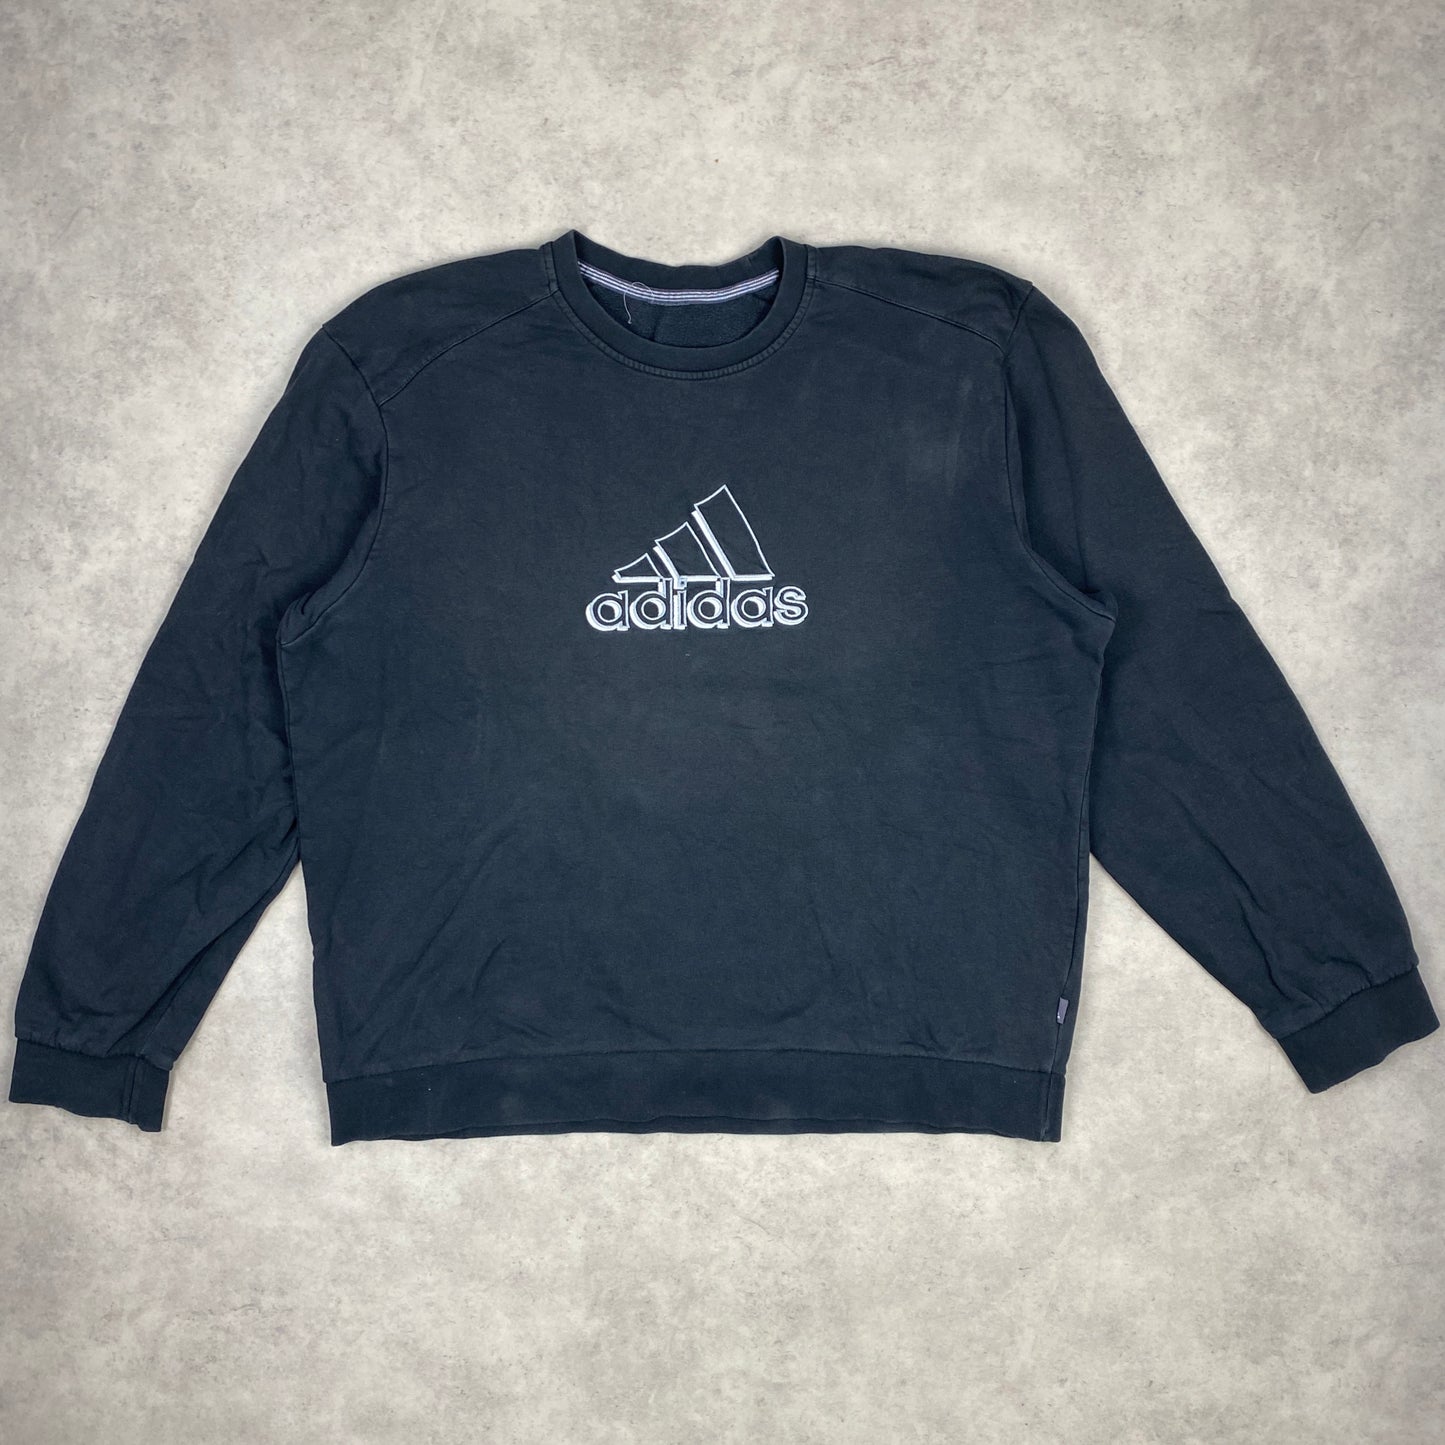 Adidas heavyweight sweater (L-XL)